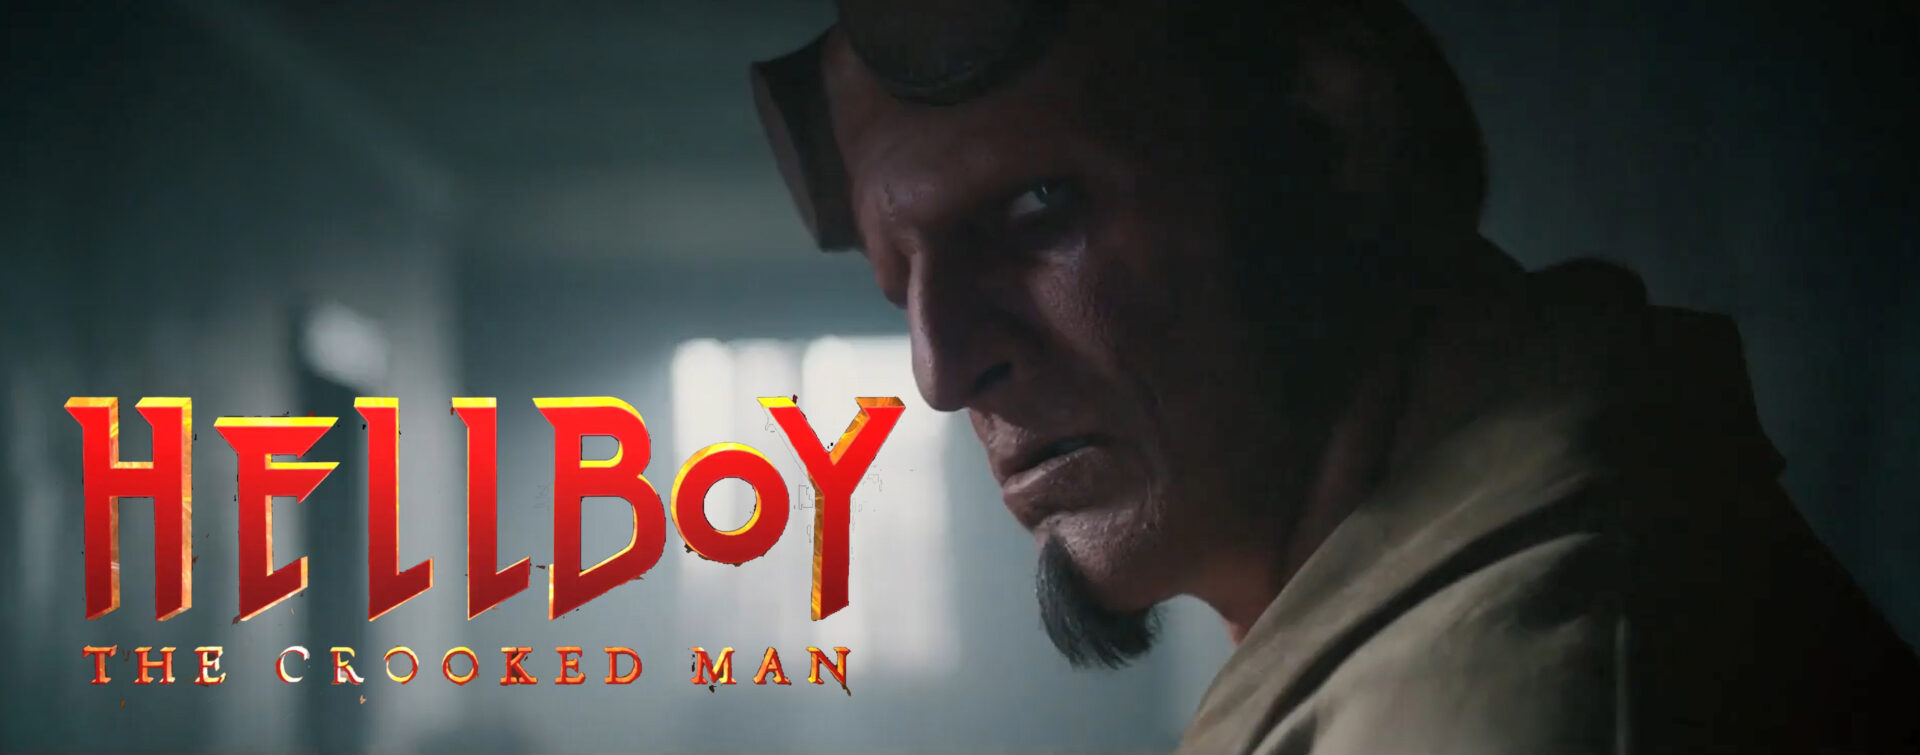 hellboy the crooked man teaser trailer banner